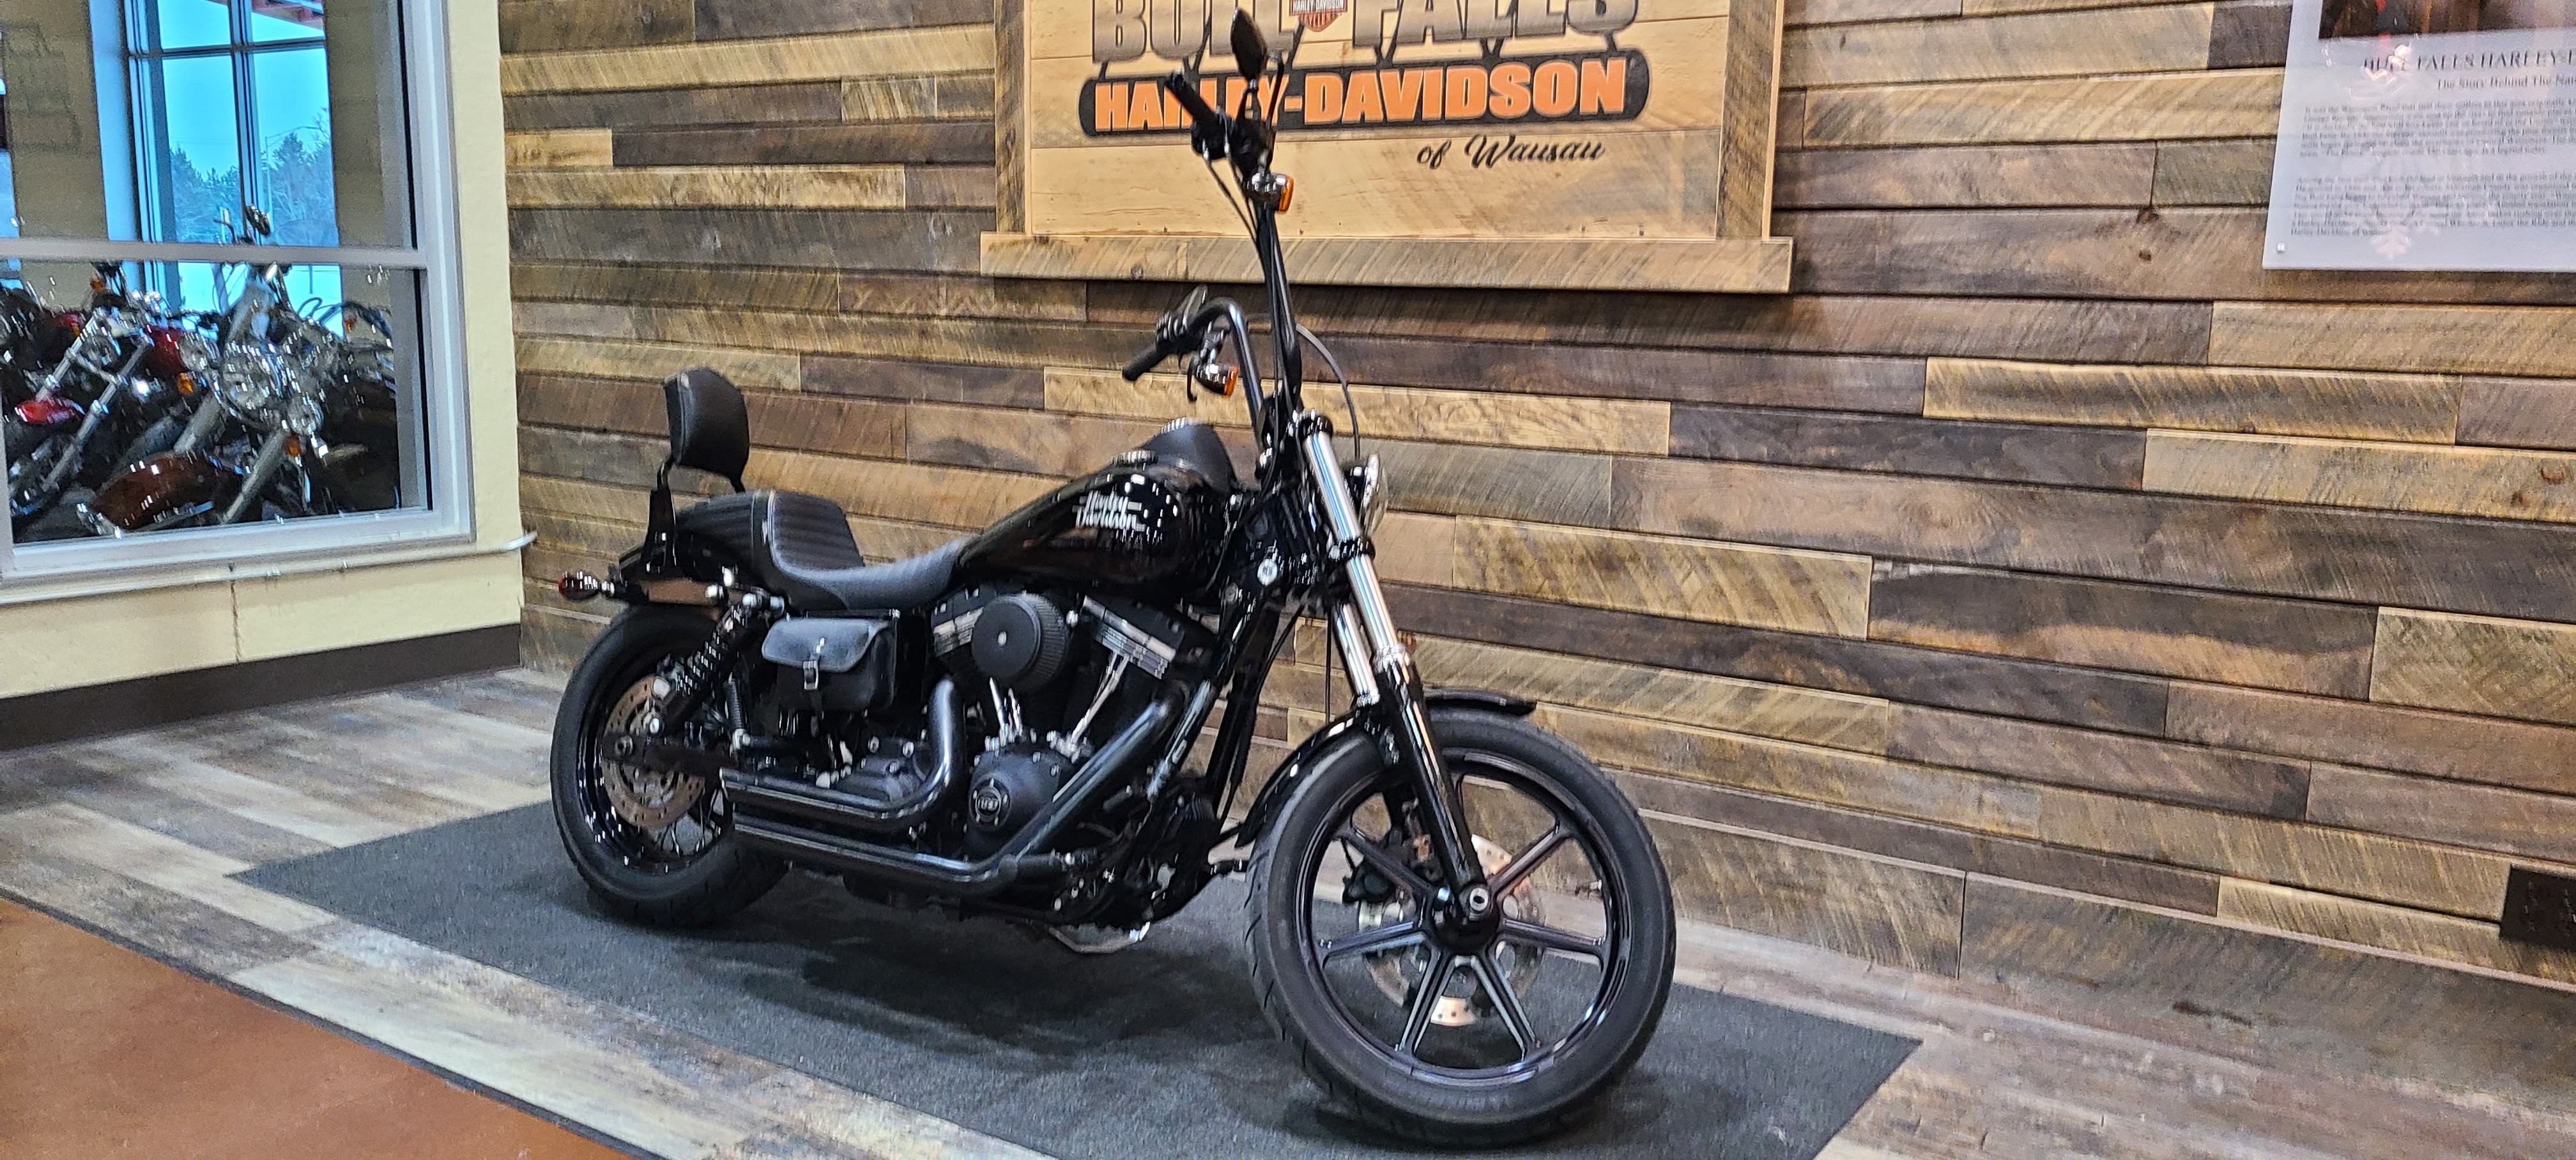 2015 Harley-Davidson Dyna Street Bob at Bull Falls Harley-Davidson